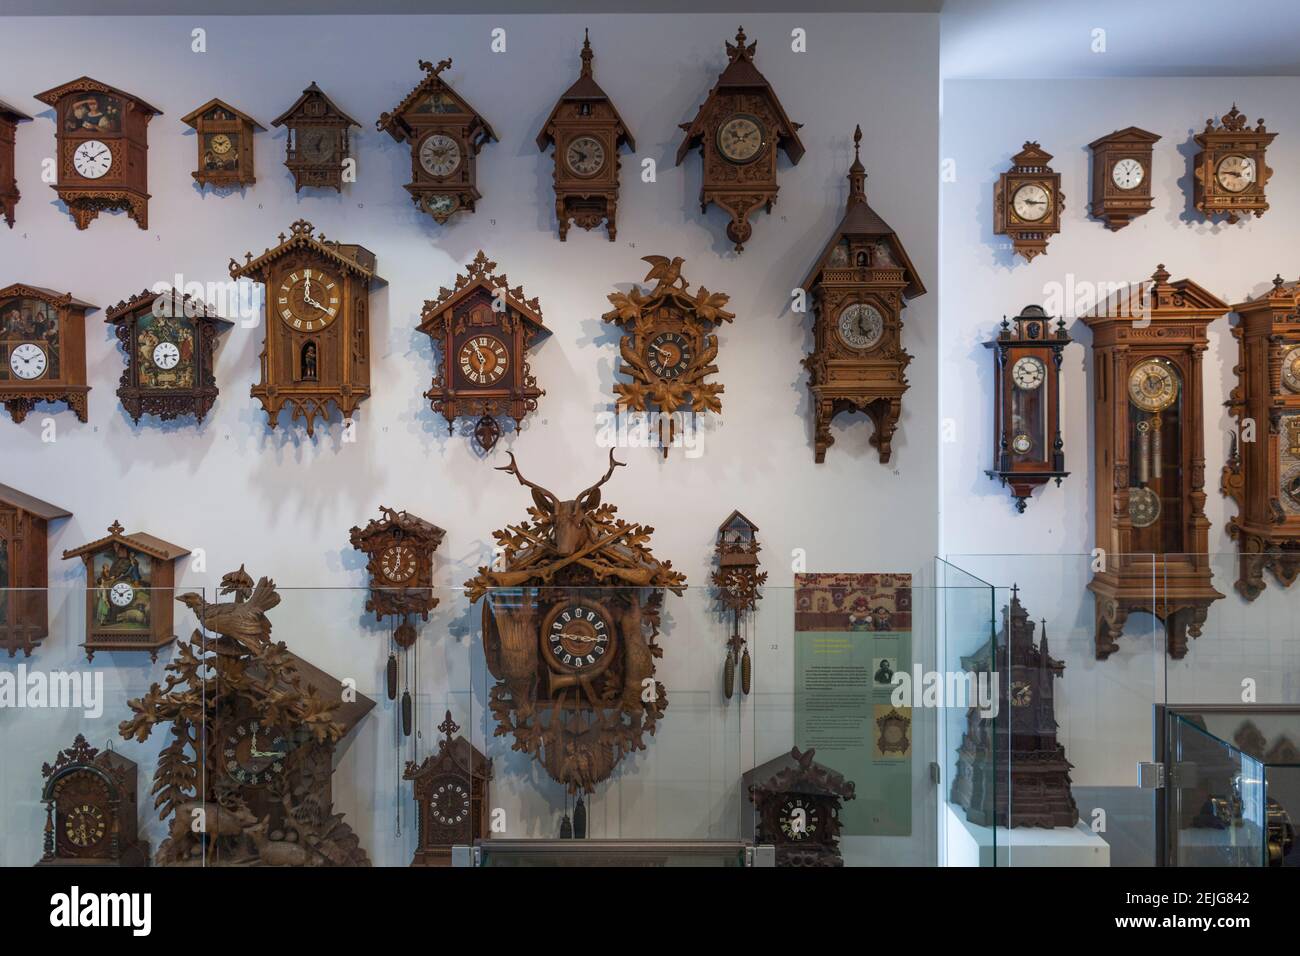 Display of cuckoo clocks in German Clock Museum, Furtwangen Im Schwarzwald, Black Forest, Baden-Wurttemberg, Germany Stock Photo